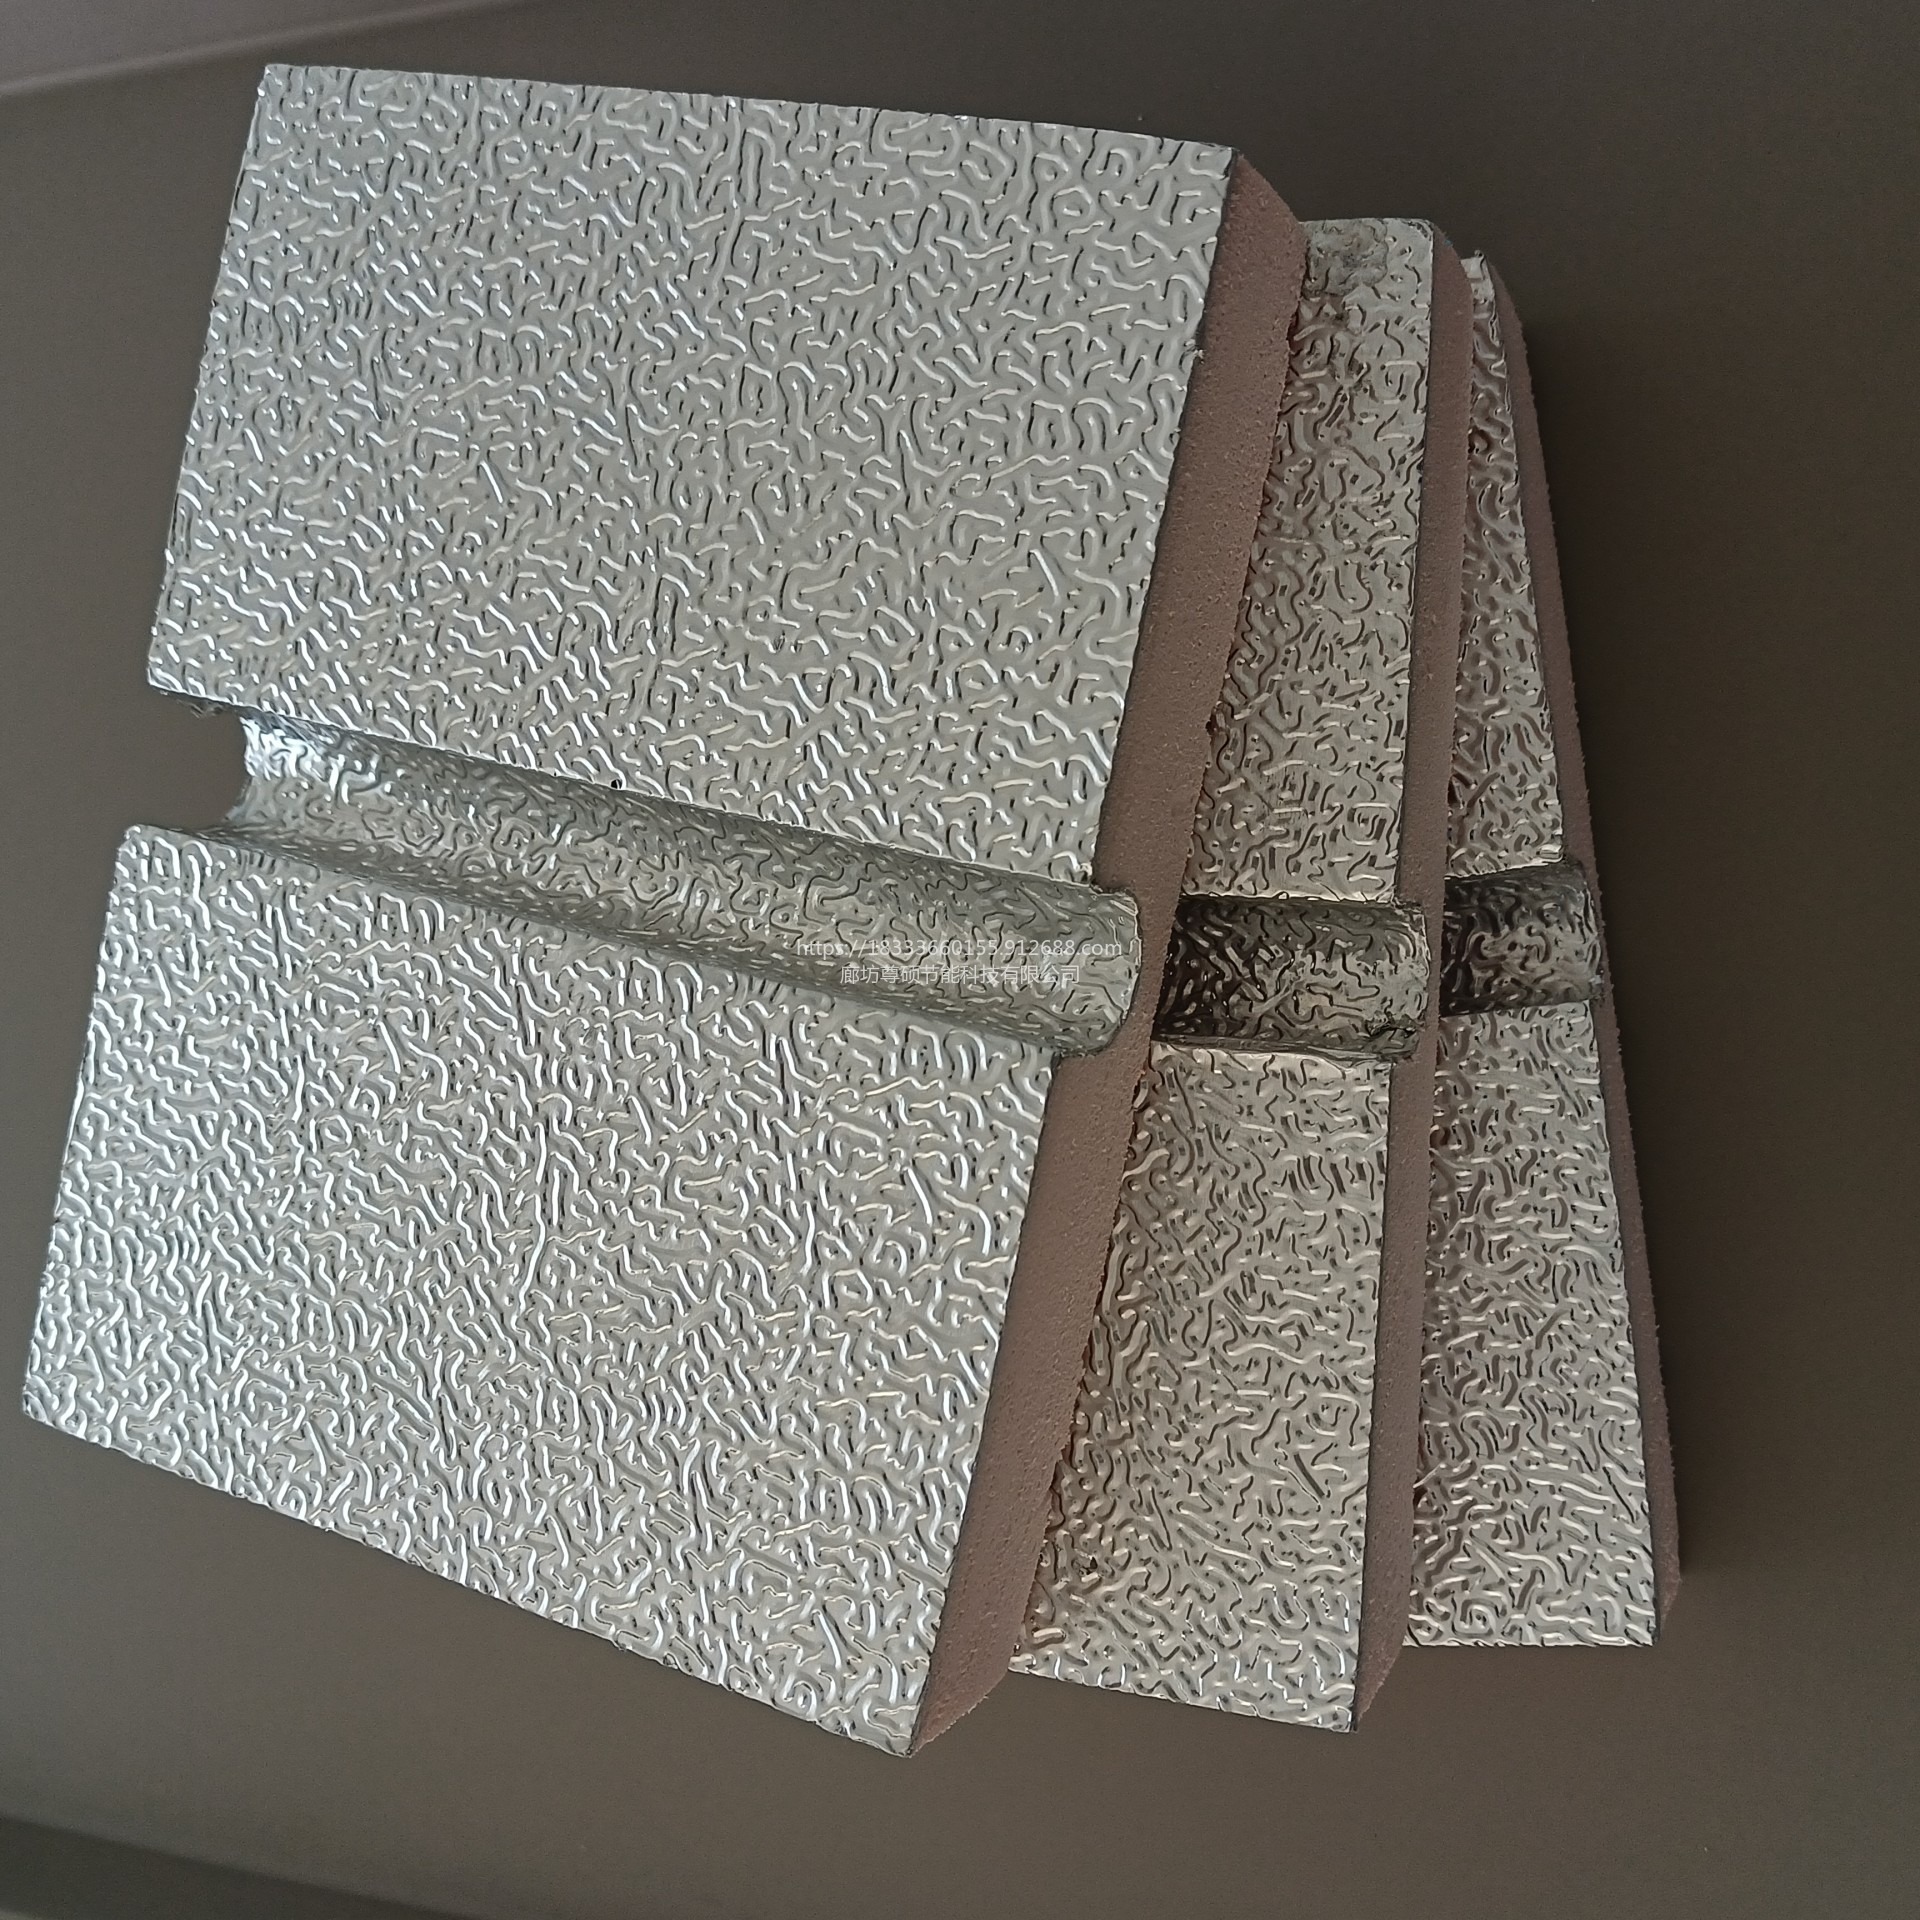 xps挤塑板     干式地暖    自流平砂浆      尊硕环保节能    产品